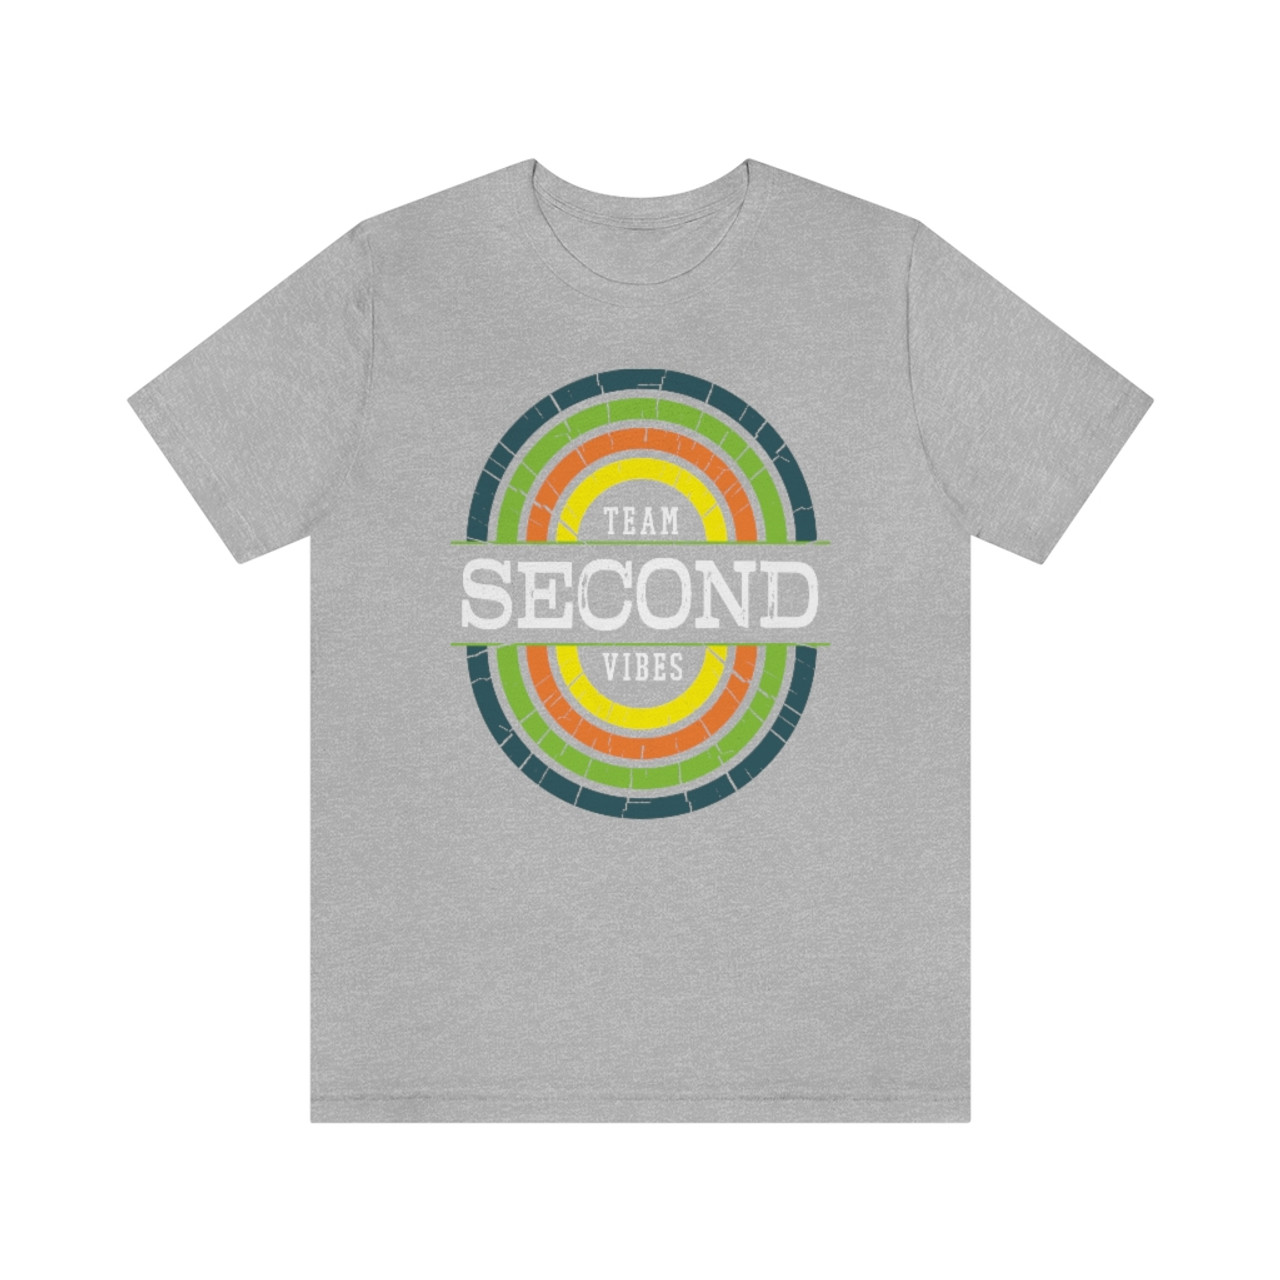 "Team Second Vibes" T-Shirt